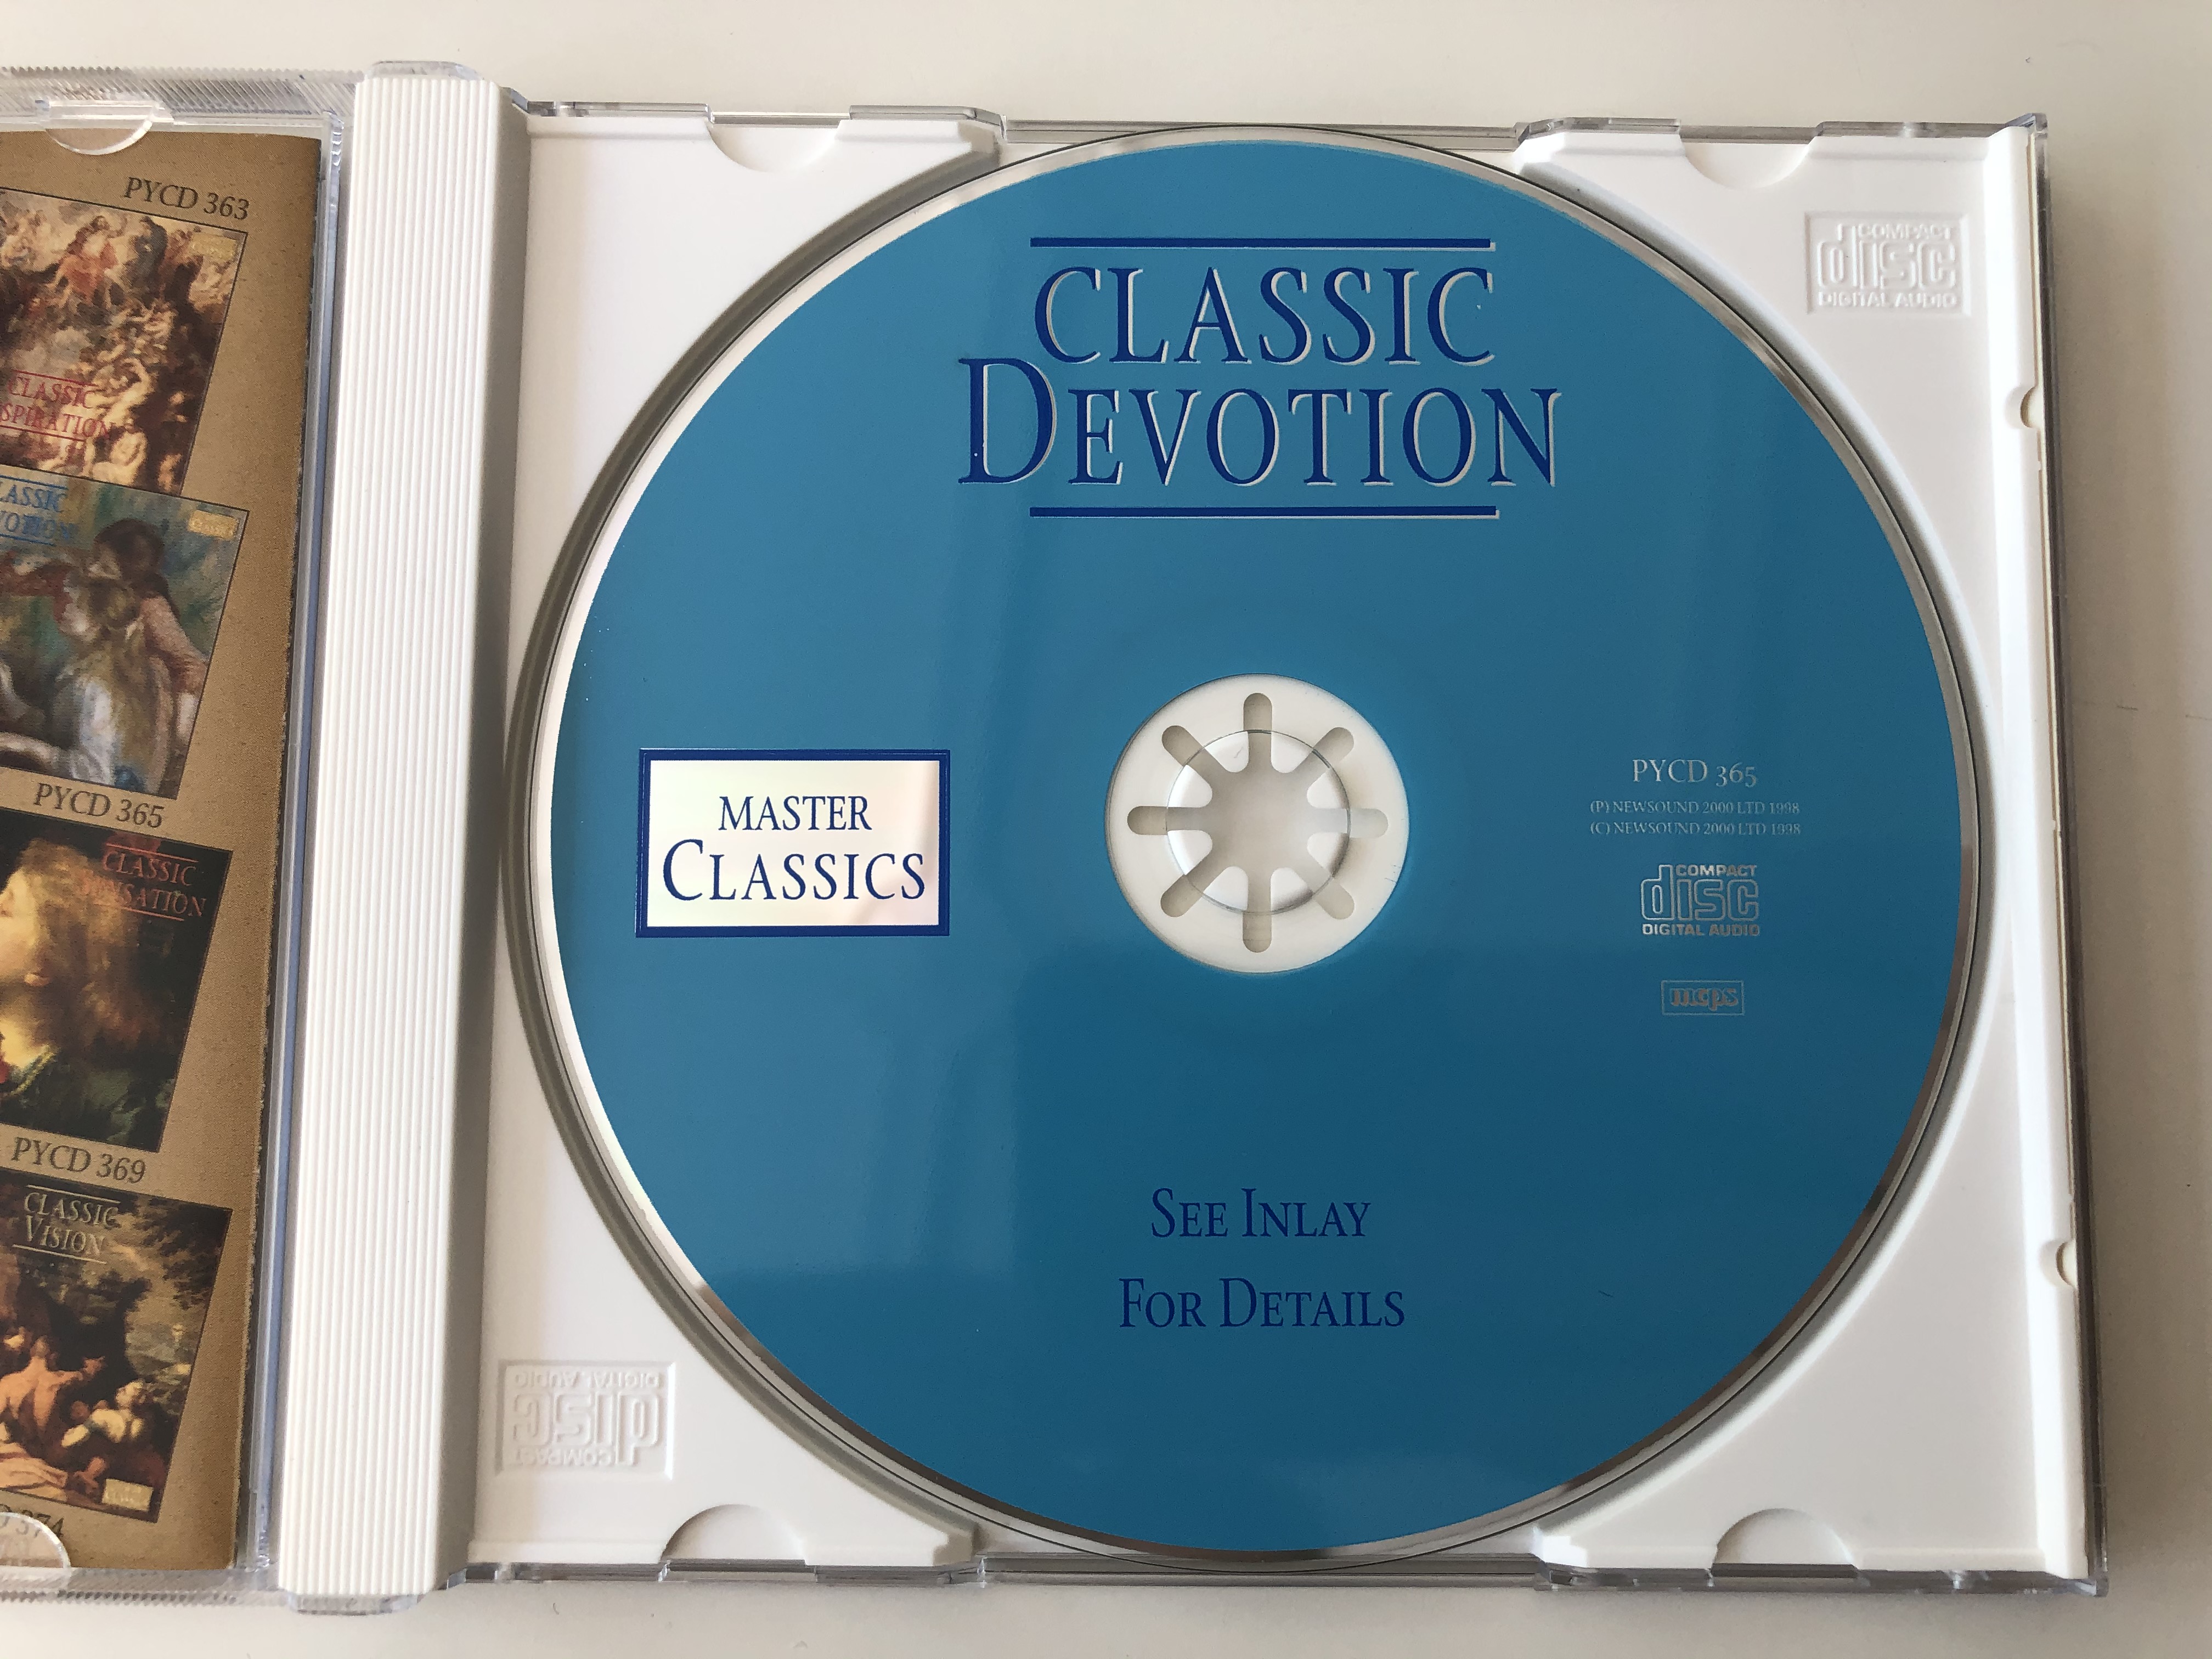 classic-devotion-liszt-rachmaninov-bach-mozart-wagner-elgar-master-classics-newsound-2000-audio-cd-1998-pycd-365-3-.jpg